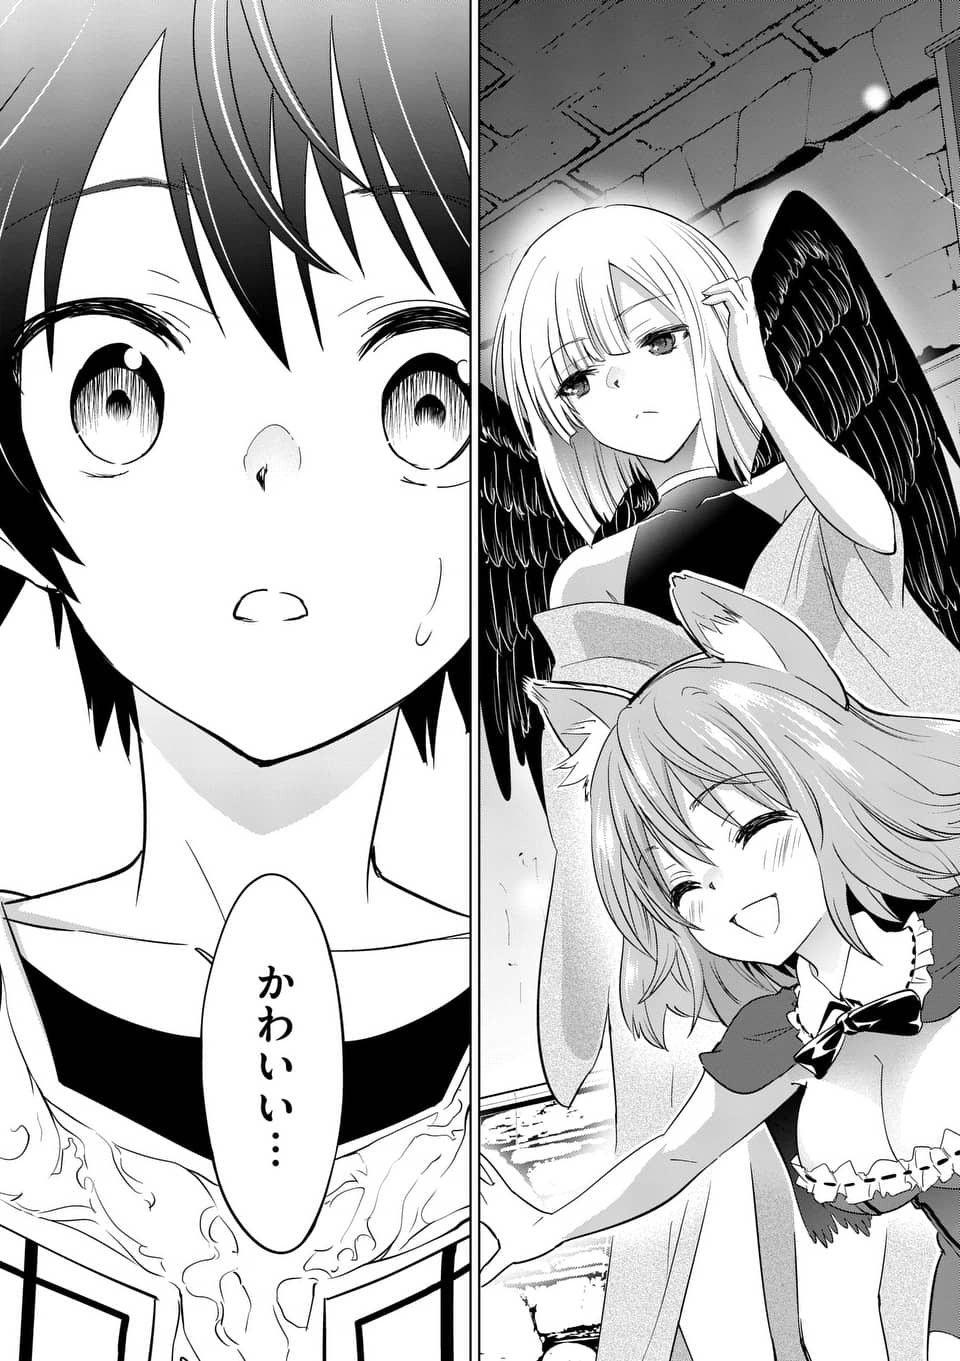 Read Shijou Saikyou Orc-San No Tanoshii Tanetsuke Harem Zukuri Manga on  Mangakakalot